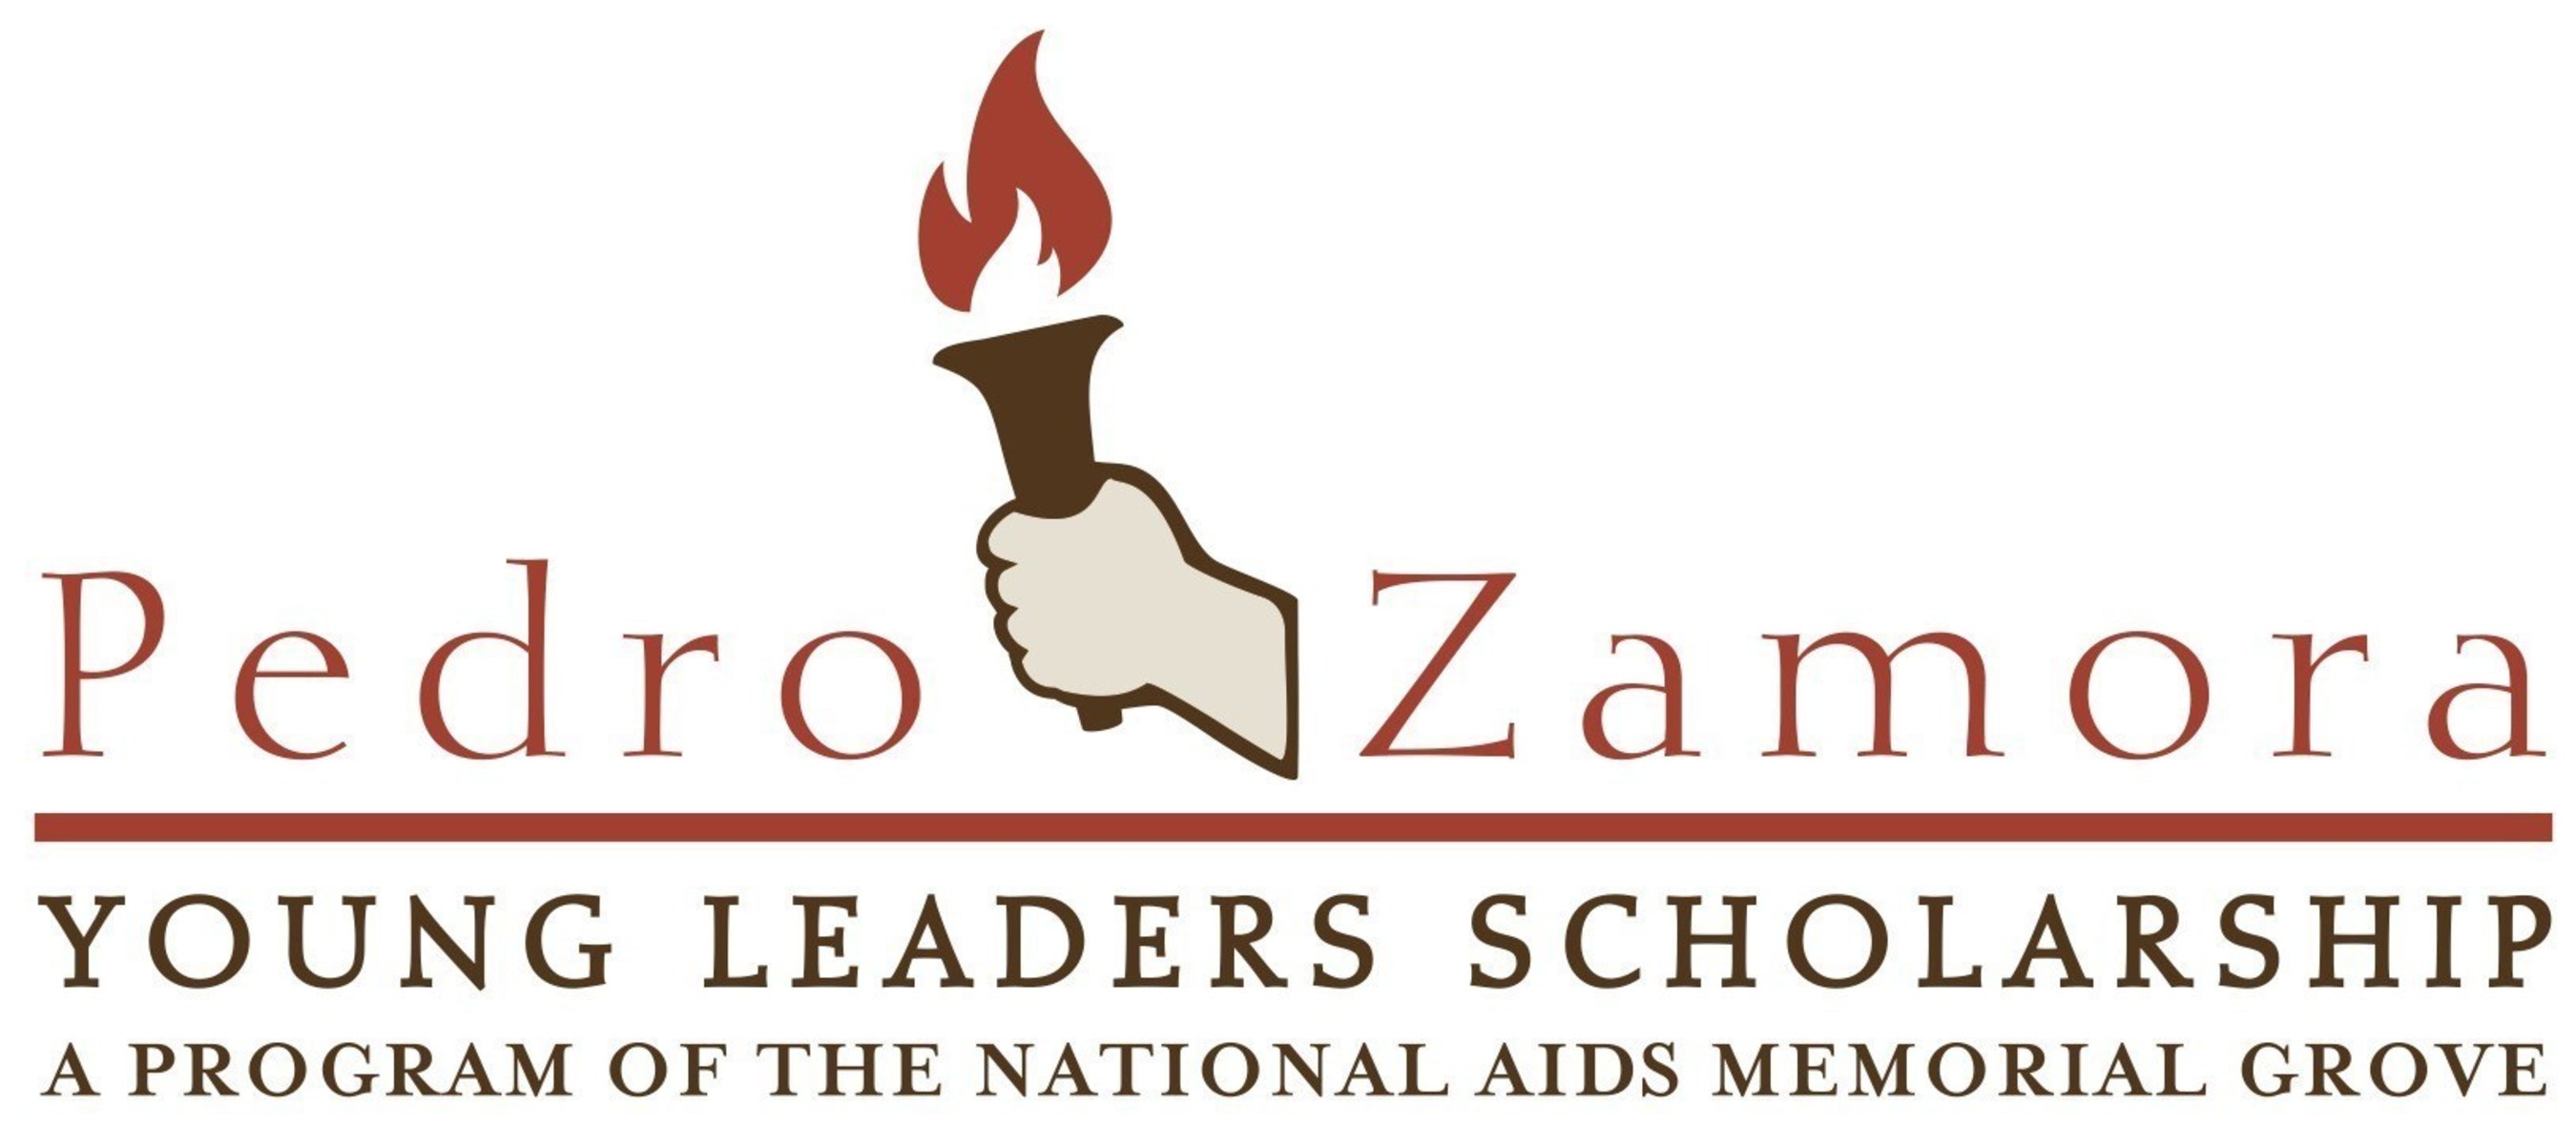 Pedro Zamora Young Leaders Scholarship